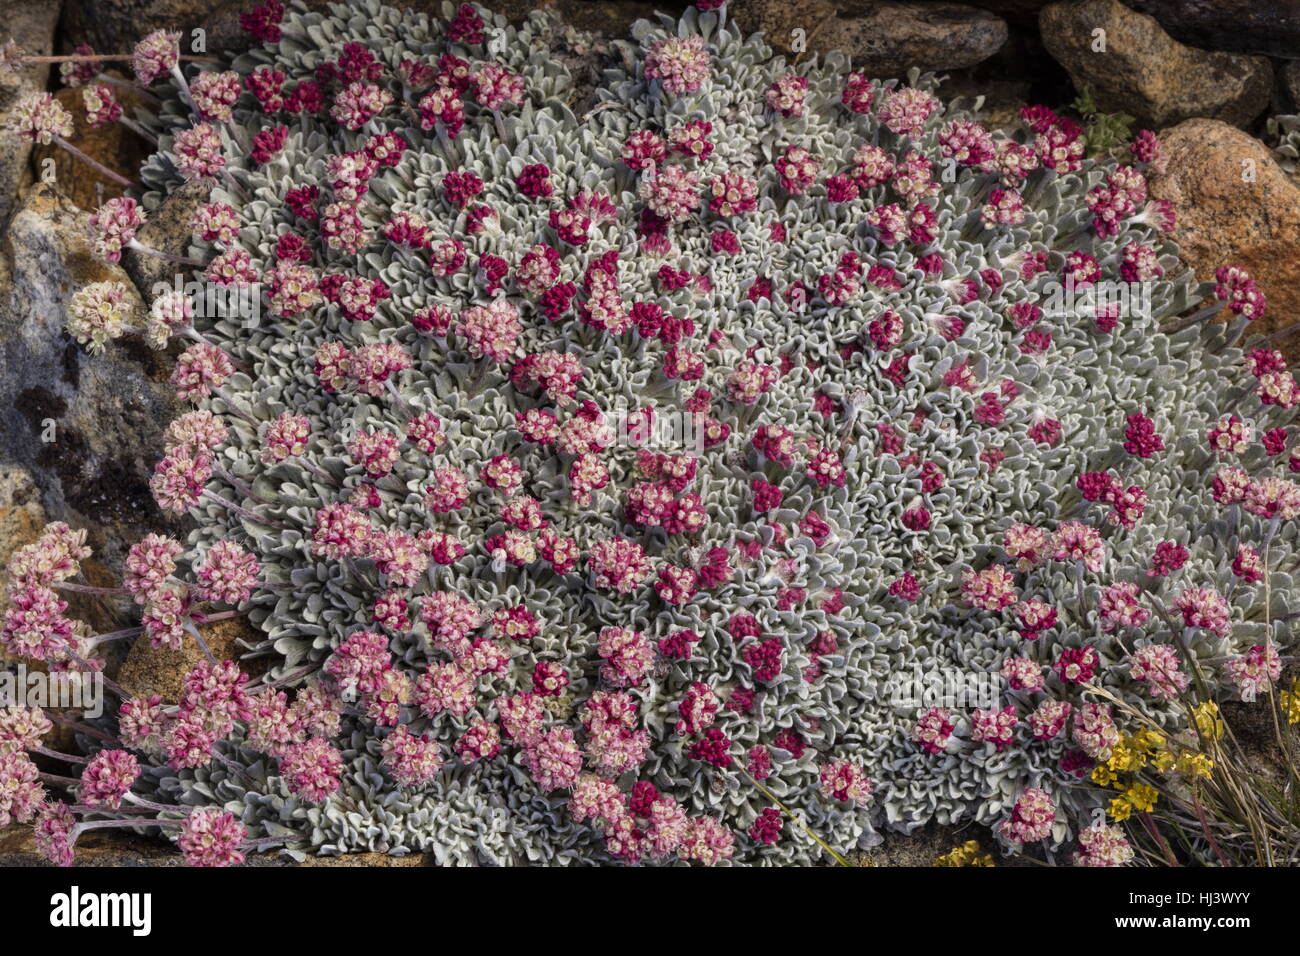 Hermosa densas aglomeraciones de gran altitud, trigo sarraceno cojín Eriogonum ovalifolium var. nivale, Yosemite, Sierra Nevada. Foto de stock